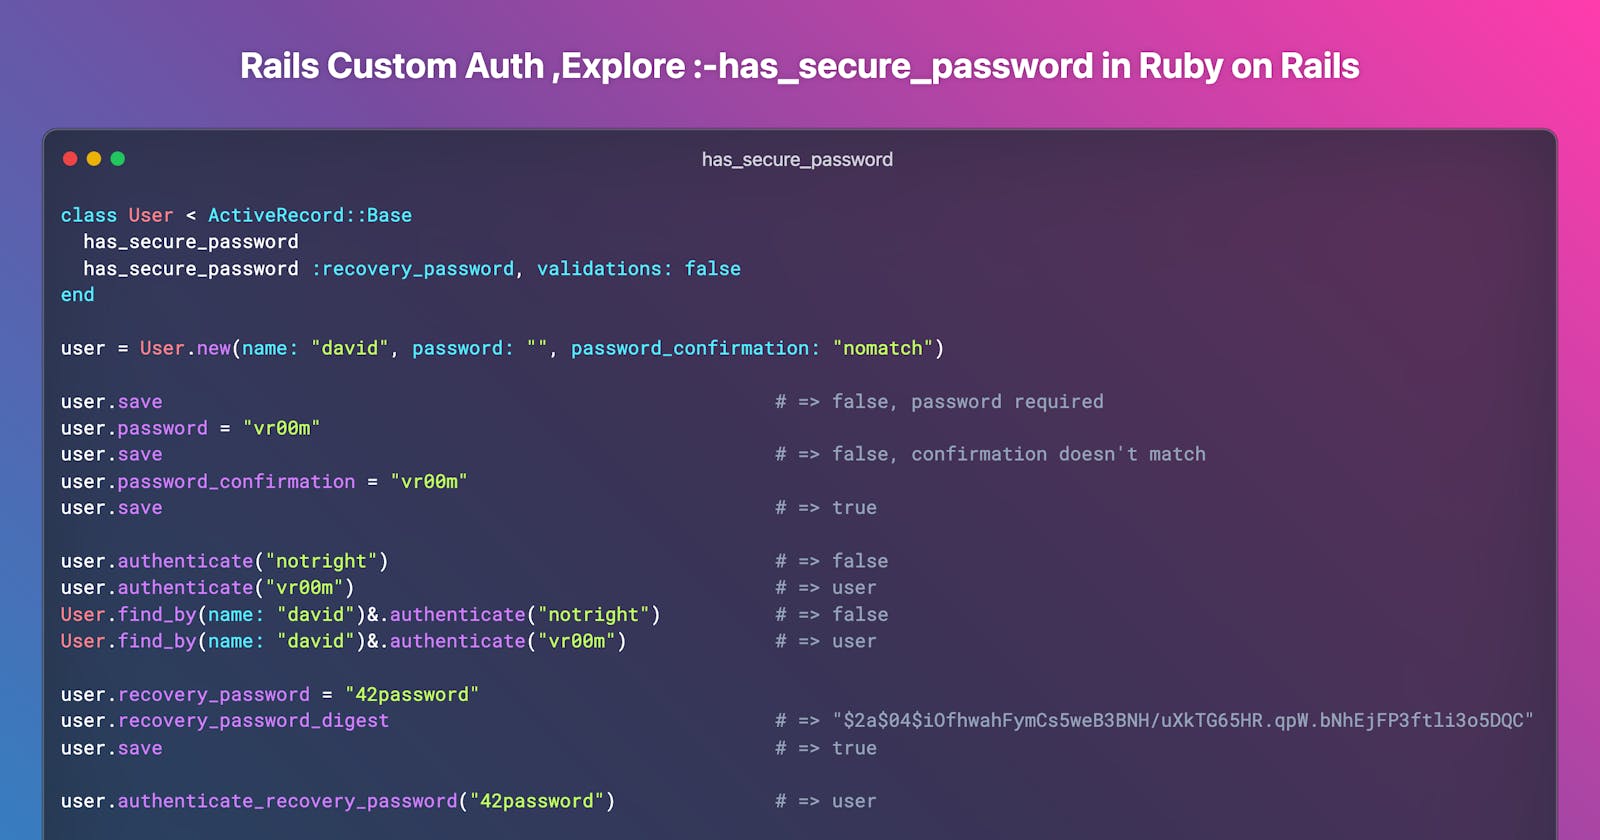 Rails Custom Auth ,Explore :-has_secure_password in Ruby on Rails